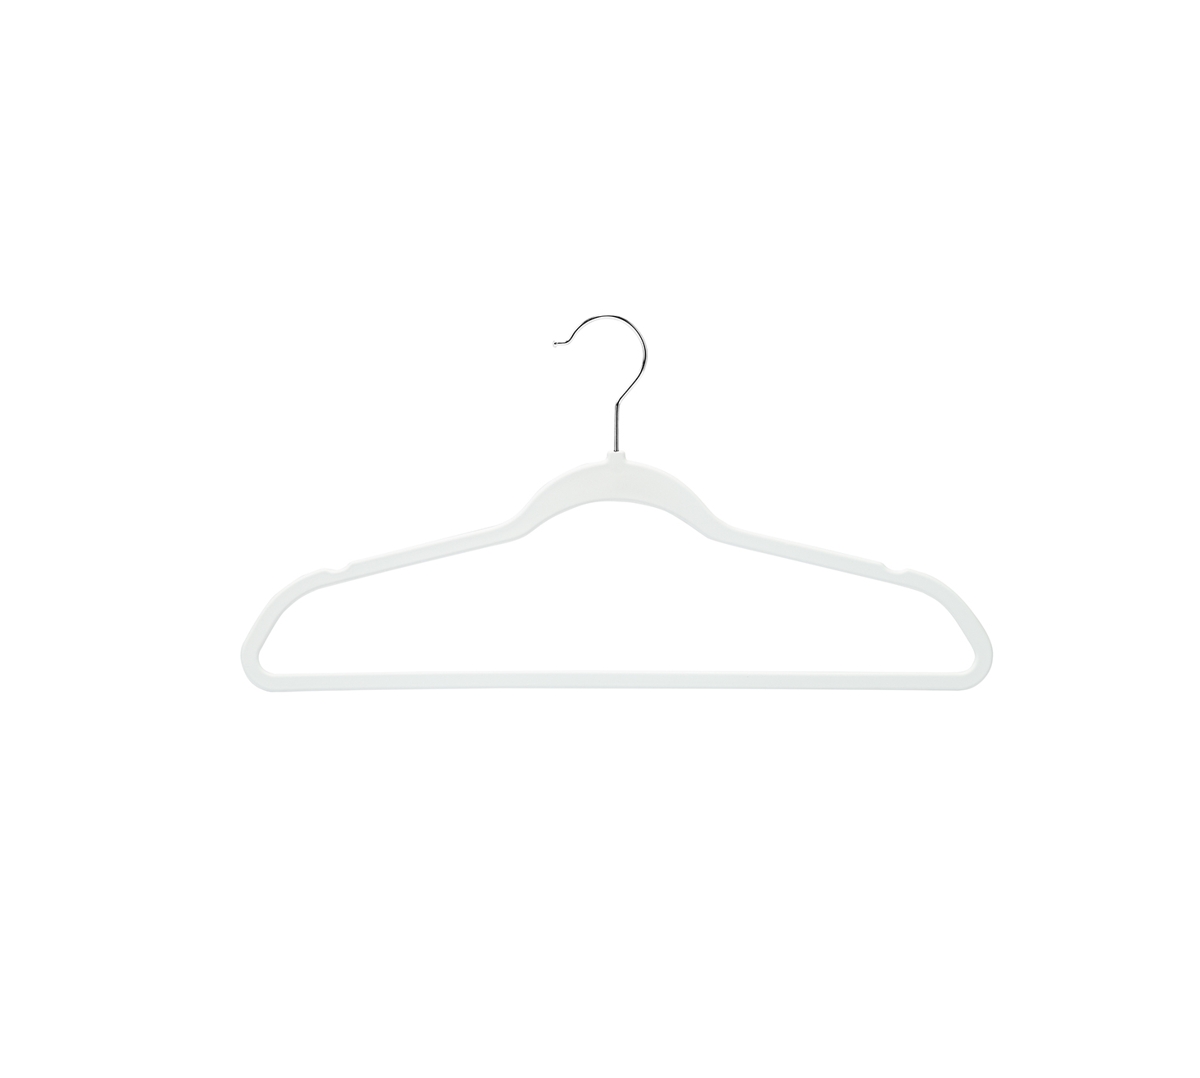 Neatfreak Clothes Hangers, 50 Pack Felt - Macy's